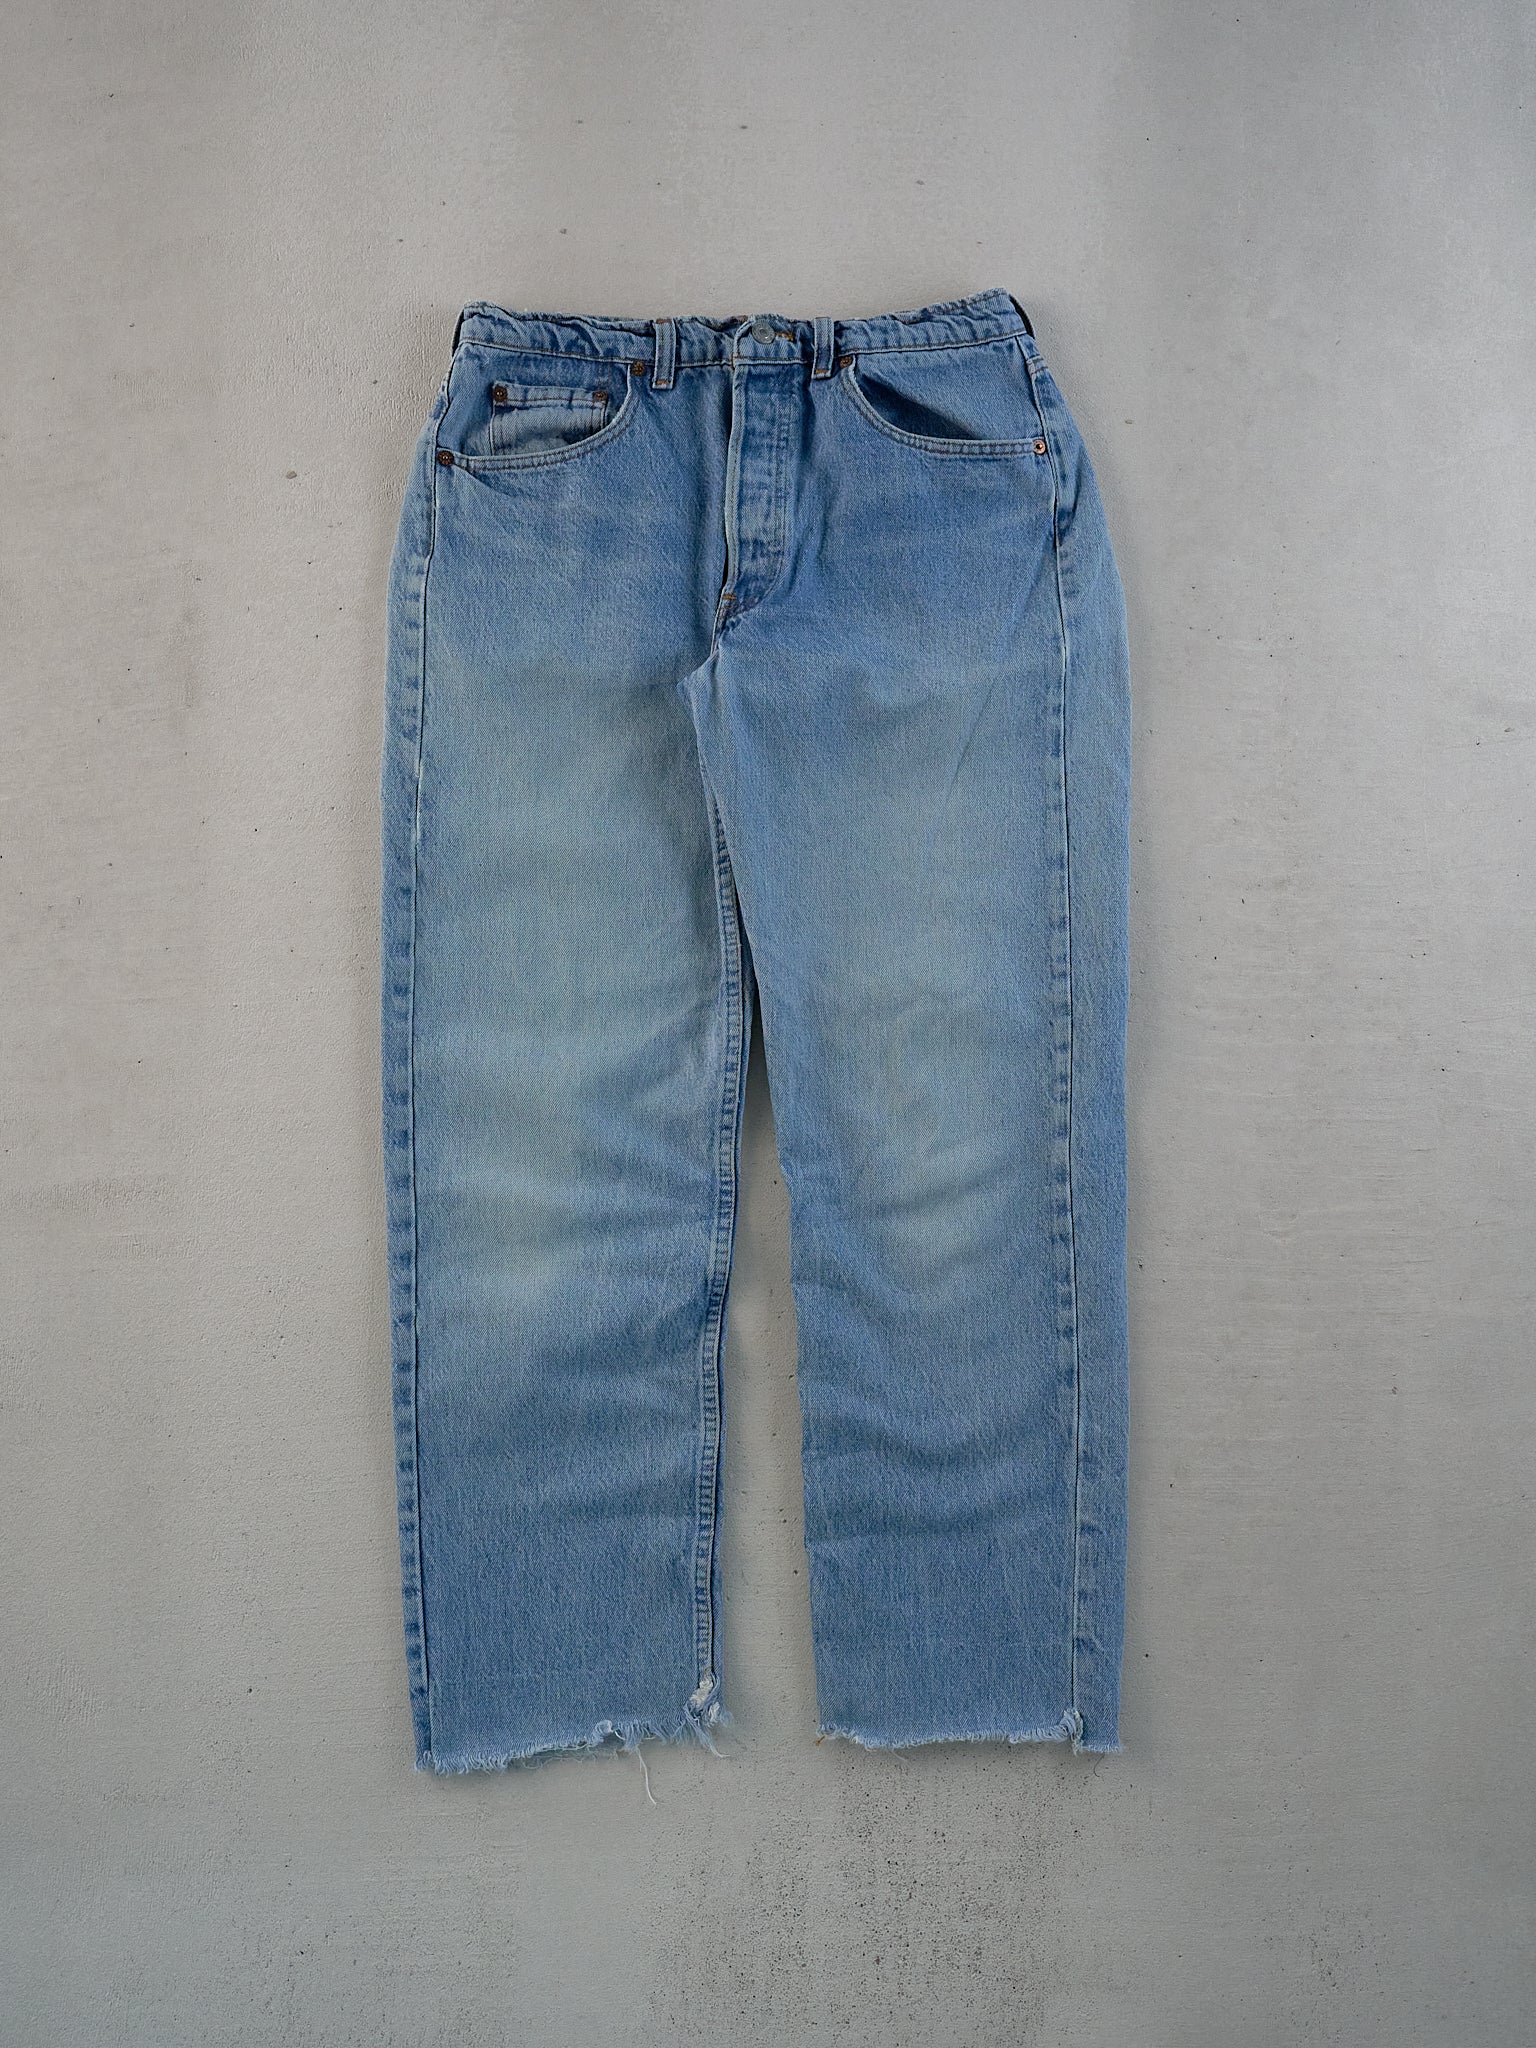 VIntage 90s Washed Blue Levi's 501 Denim Jeans (30x28)